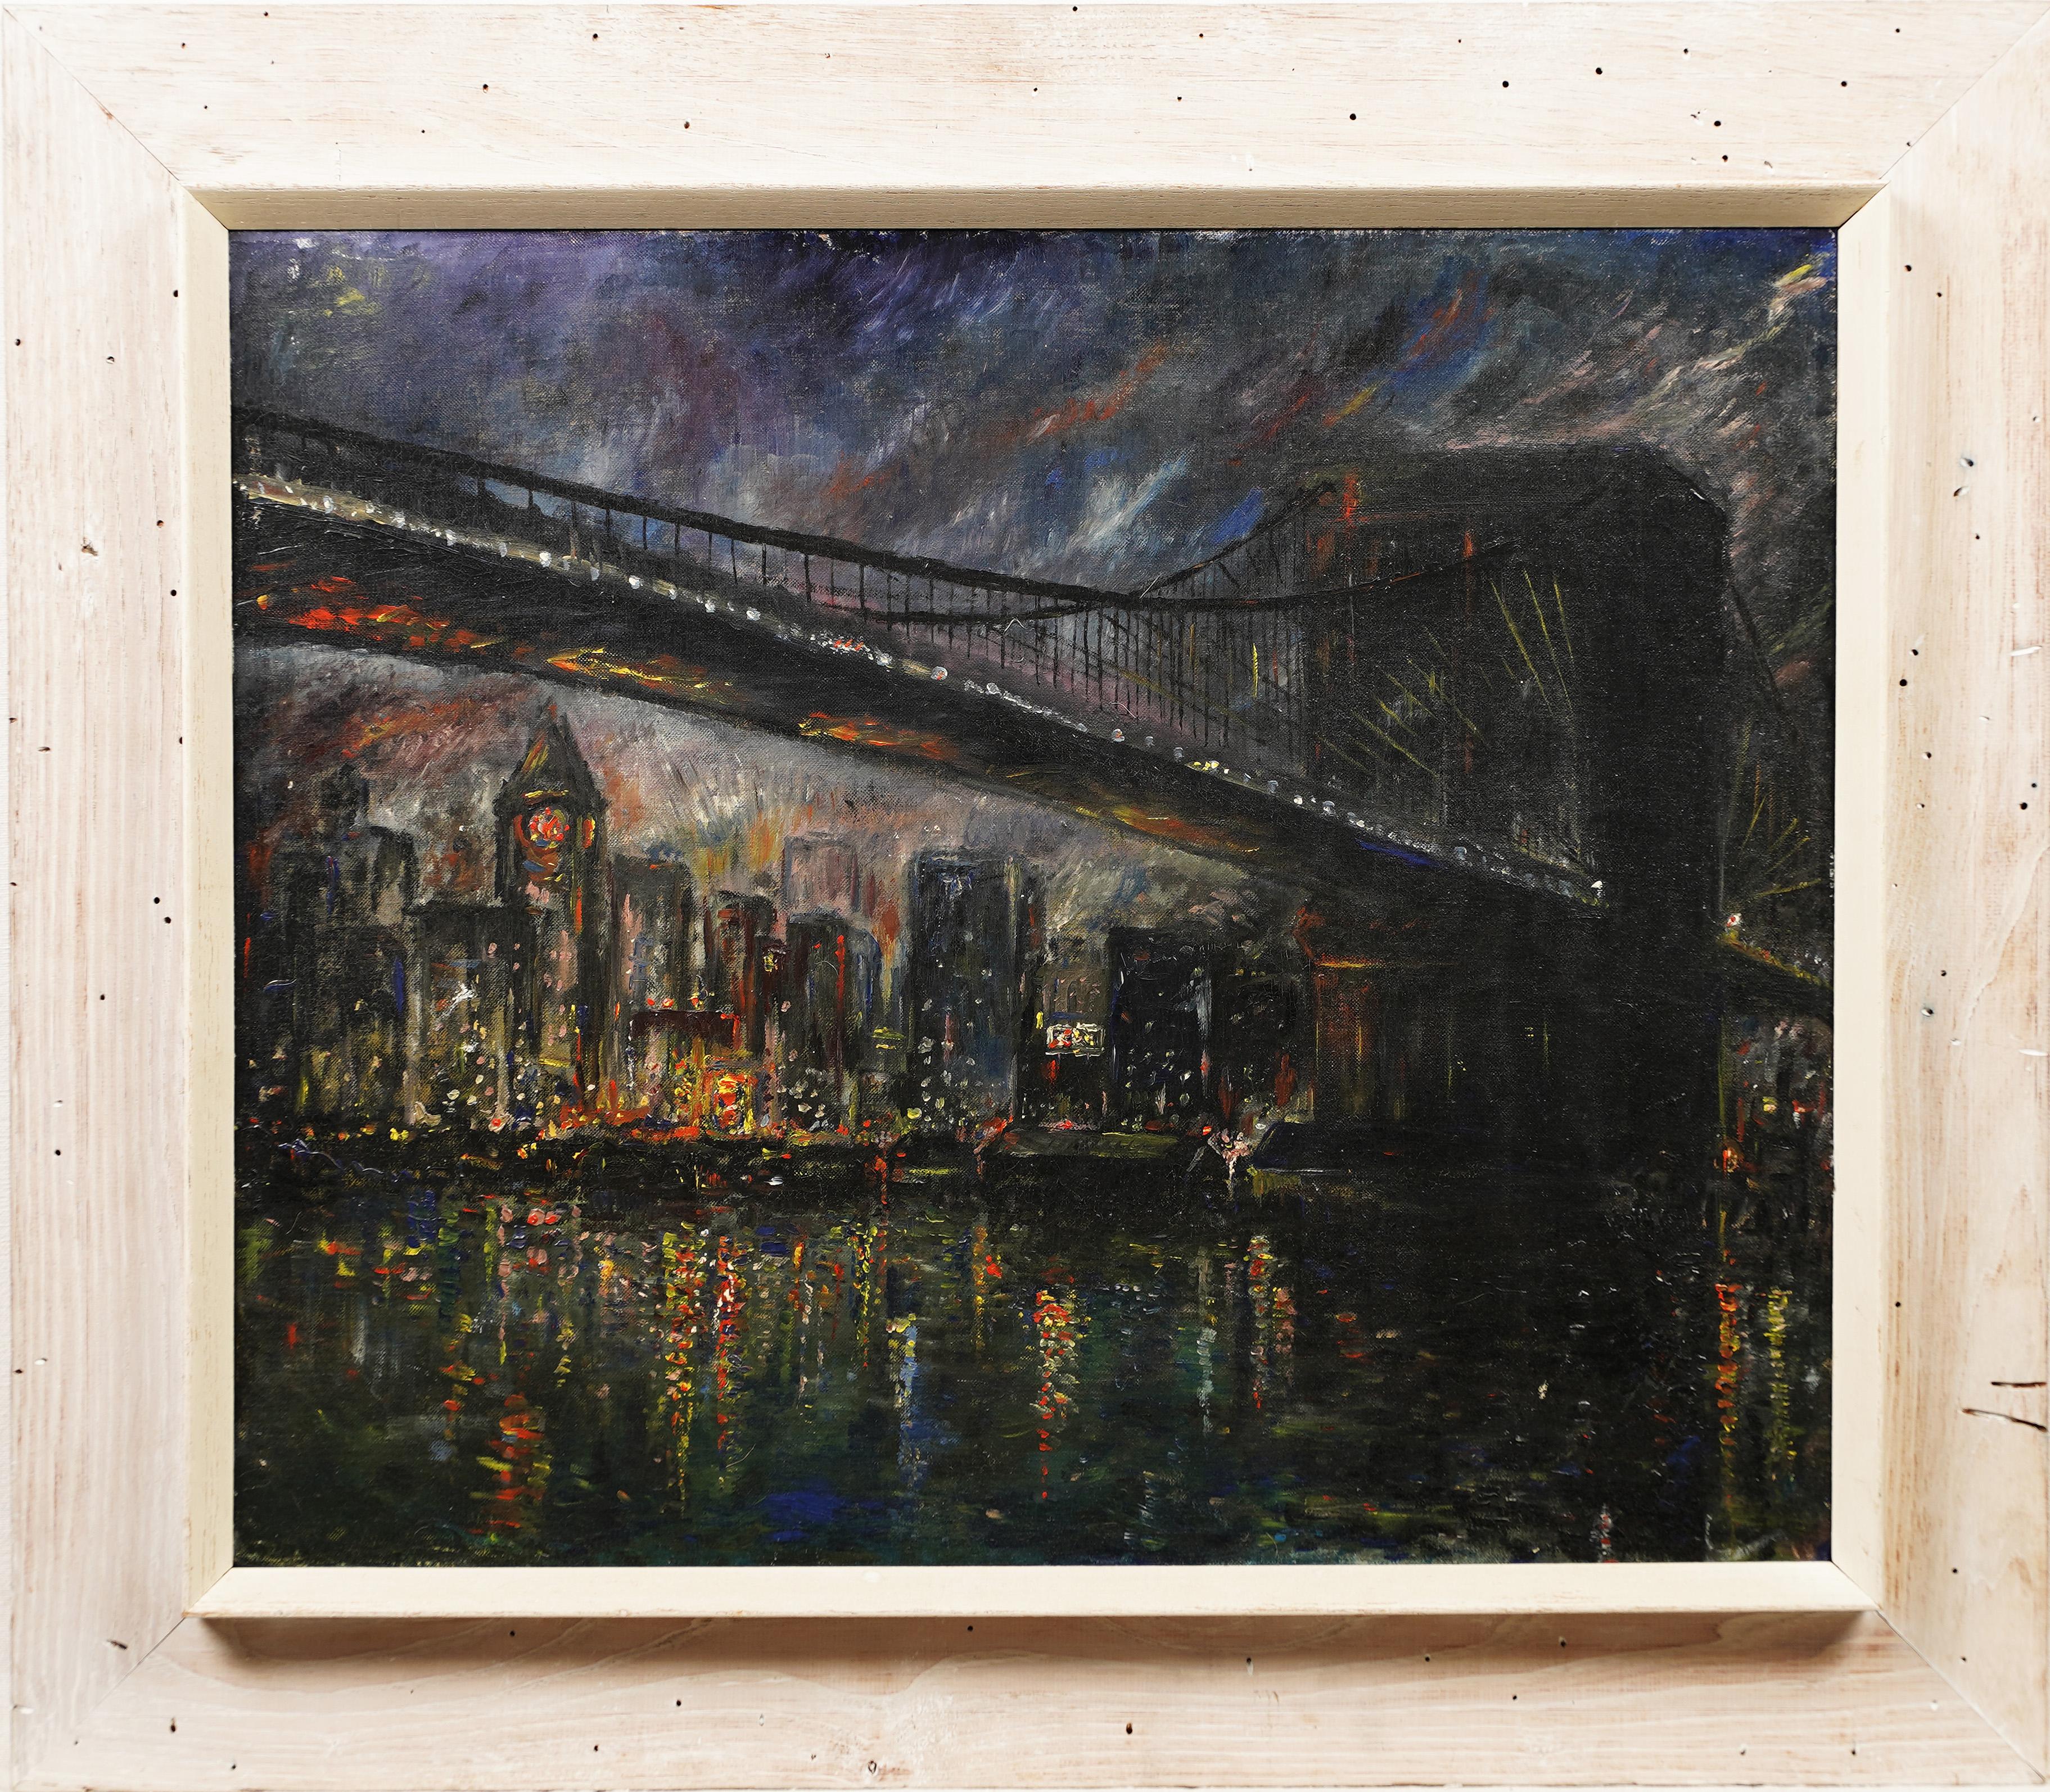 Exhibited Ashcan School Nocturnal New York City Brooklyn Bridge, Ölgemälde